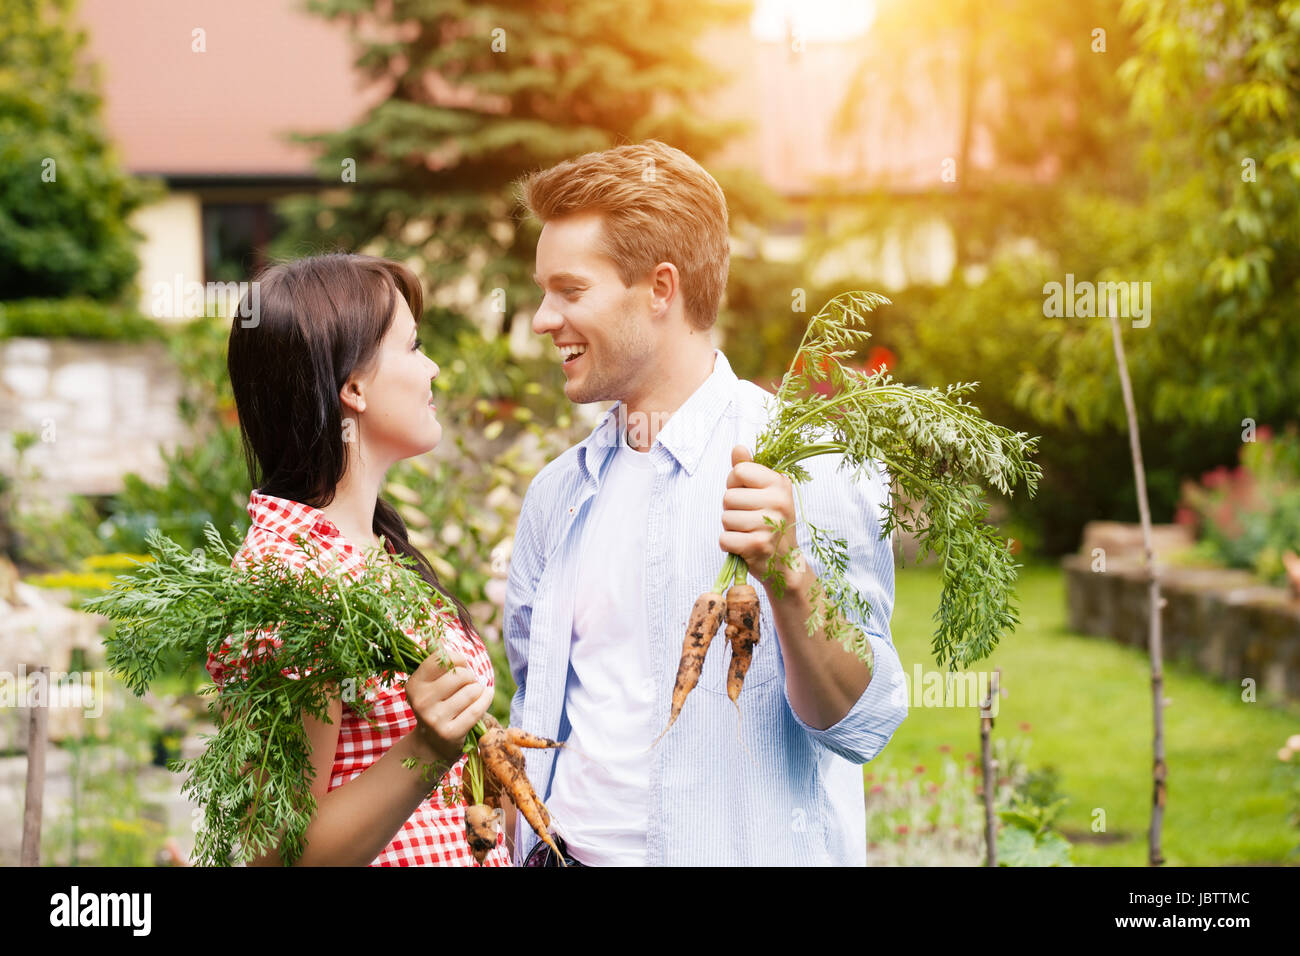 Gardening in summer - happy couple in vegetable garden harvesting carrots and having lots of fun Stock Photo